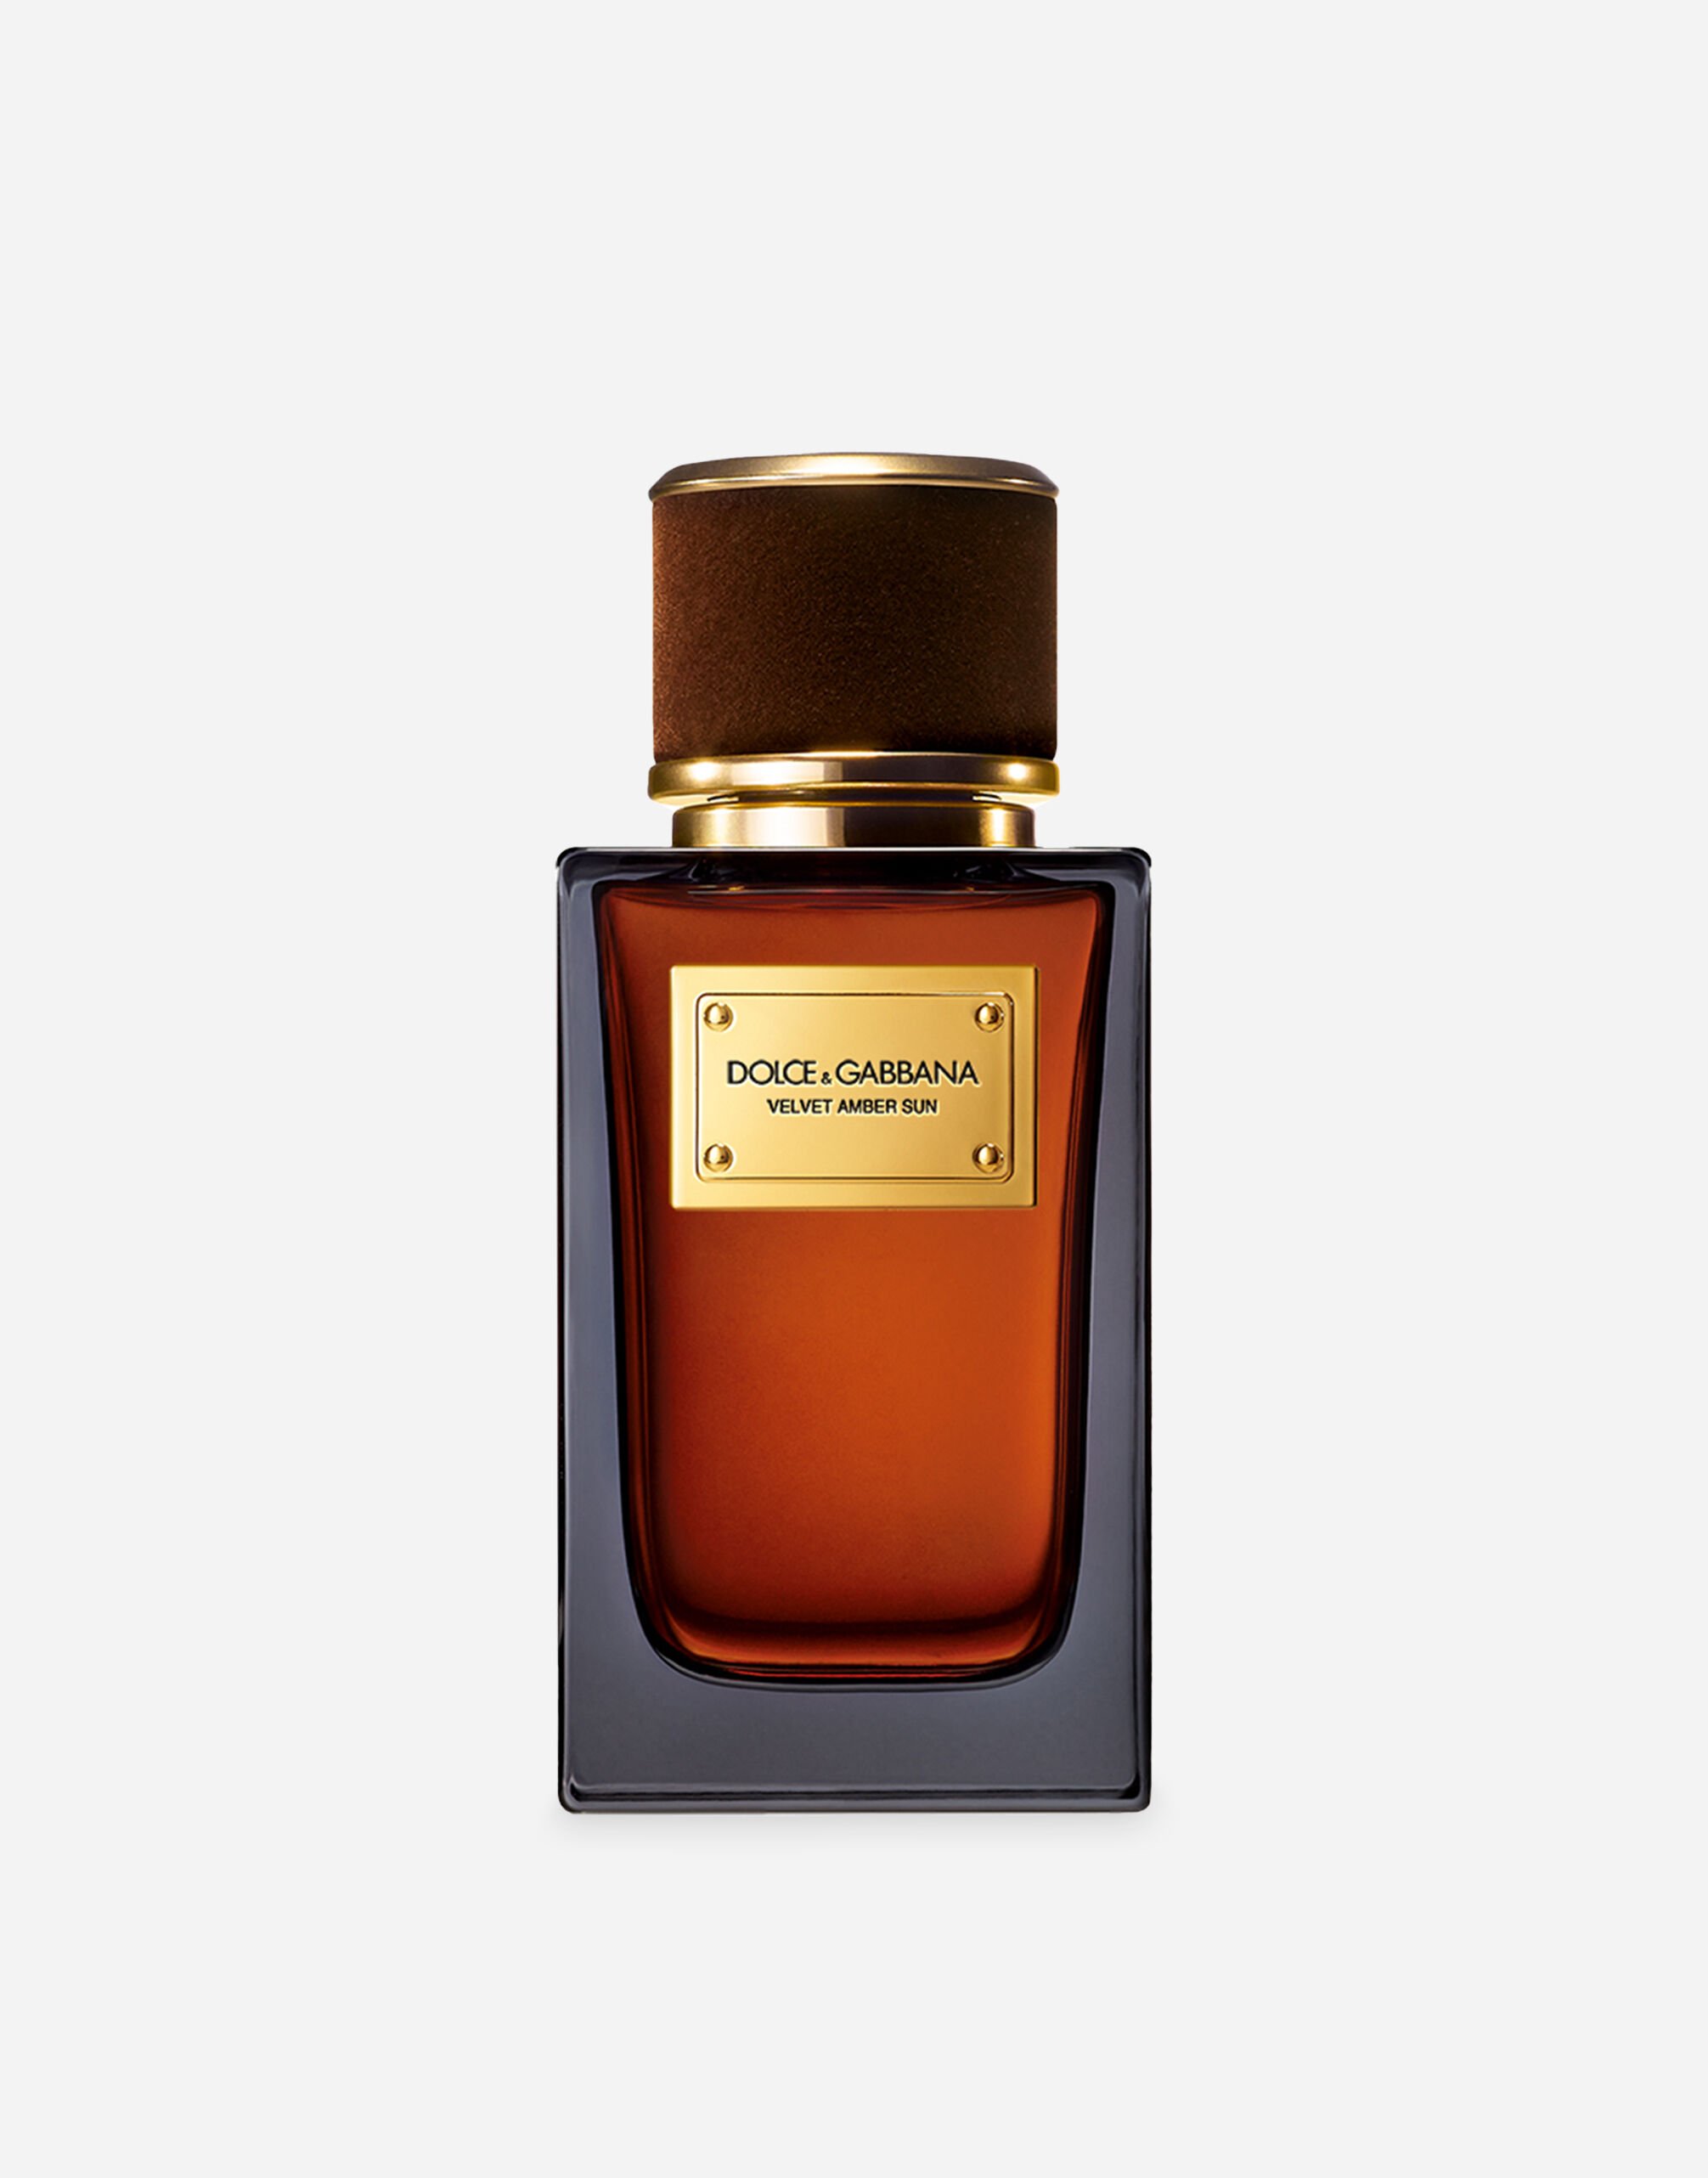 Dolce & Gabbana Velvet Amber Sun Eau de Parfum - VP003HVP000